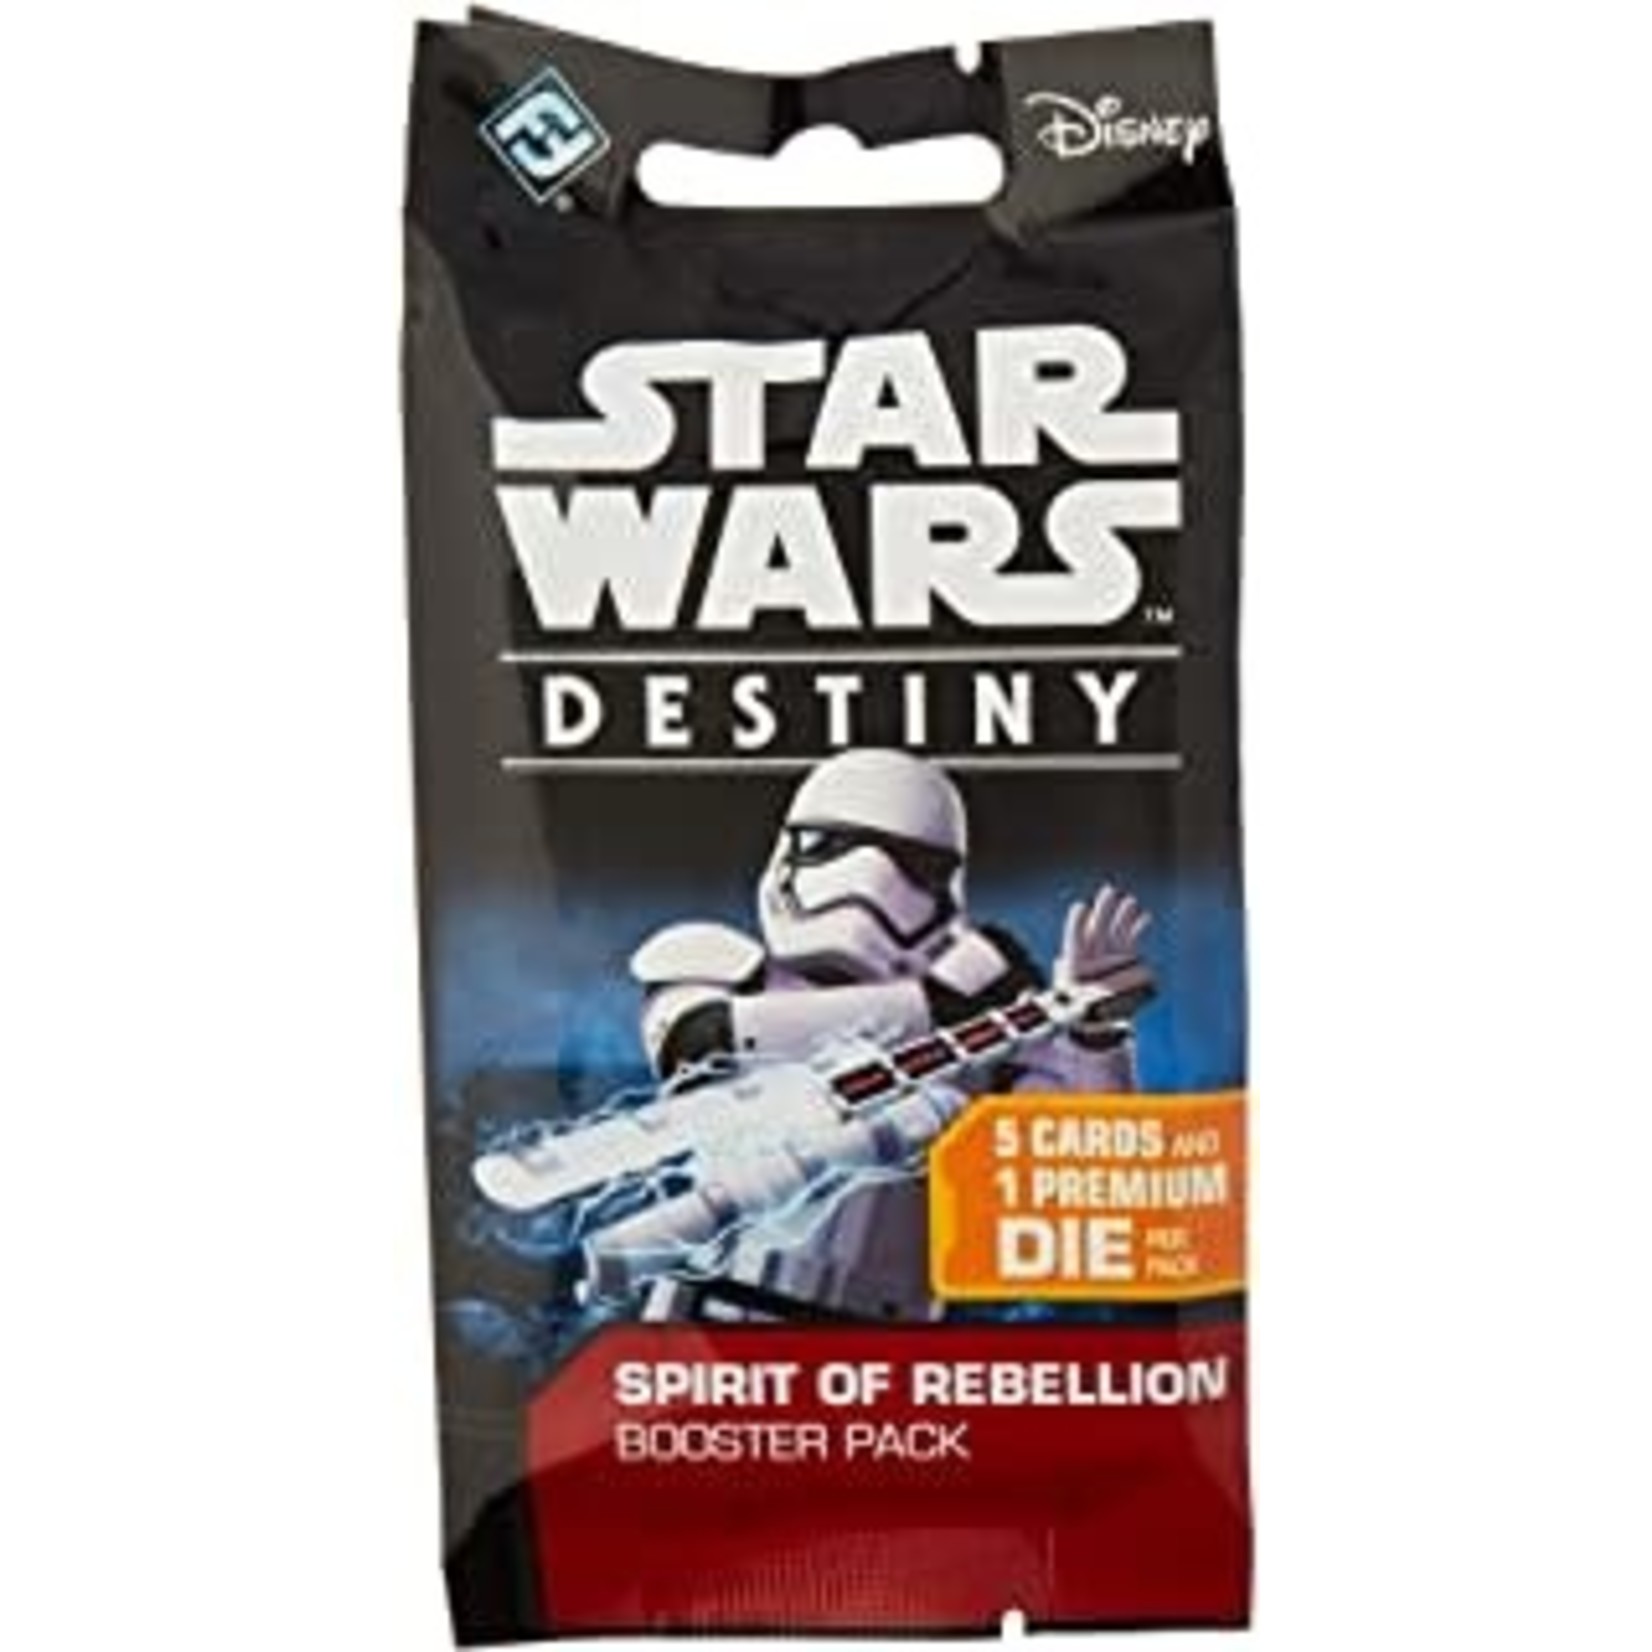 Star Wars Destiny Spirit of Rebellion Booster Pack